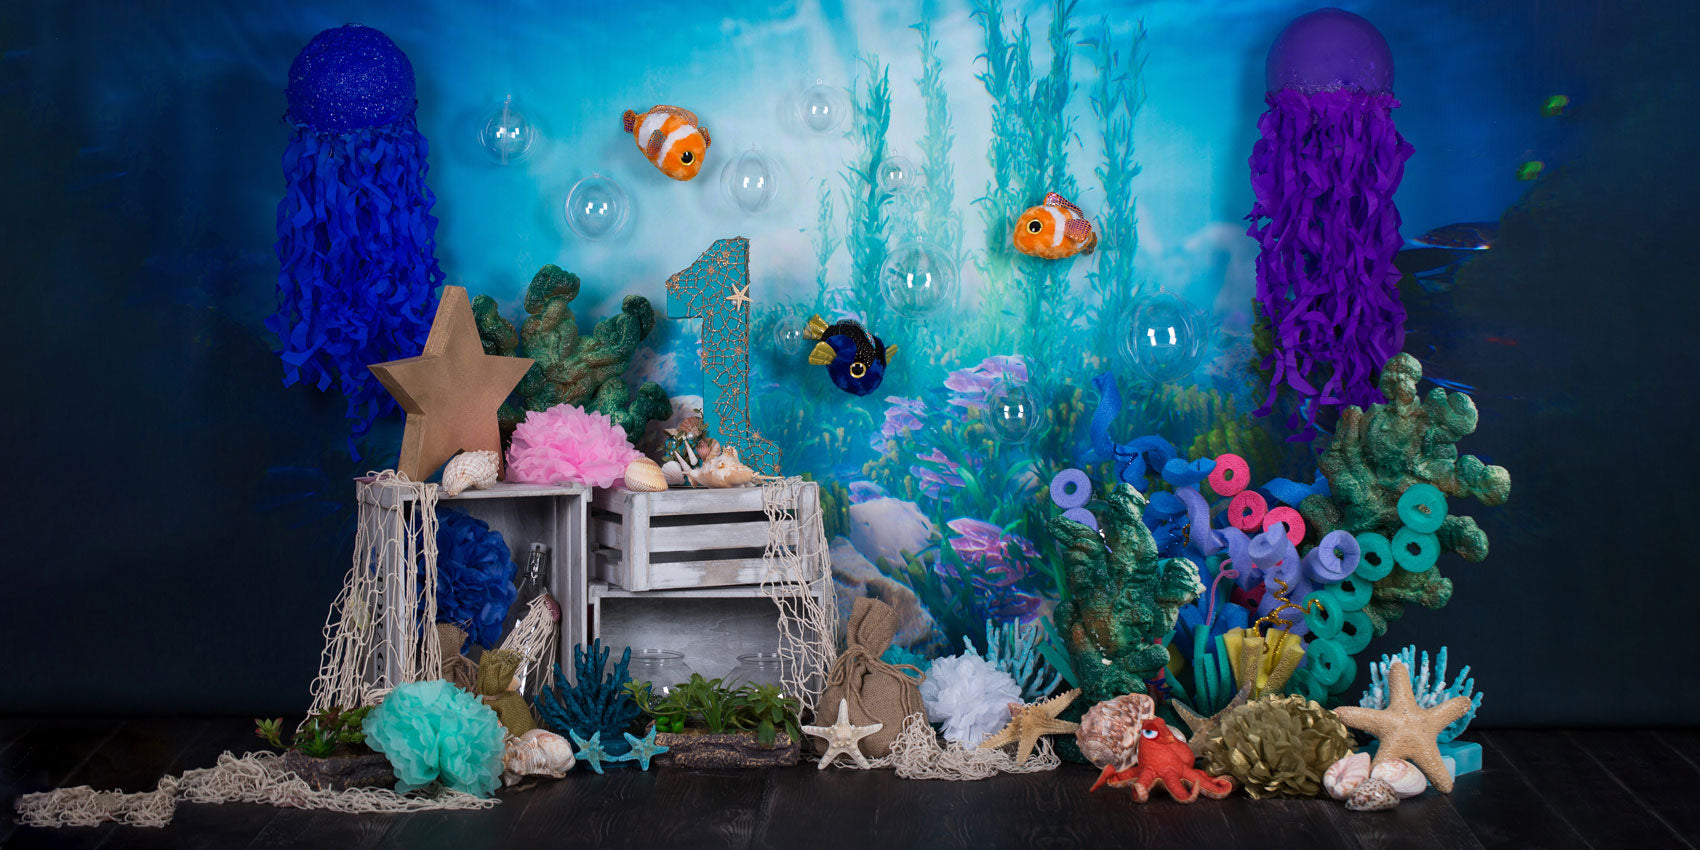 Kate mermaid under sea 1st birthday cake smash backdrop designed by studio gumot